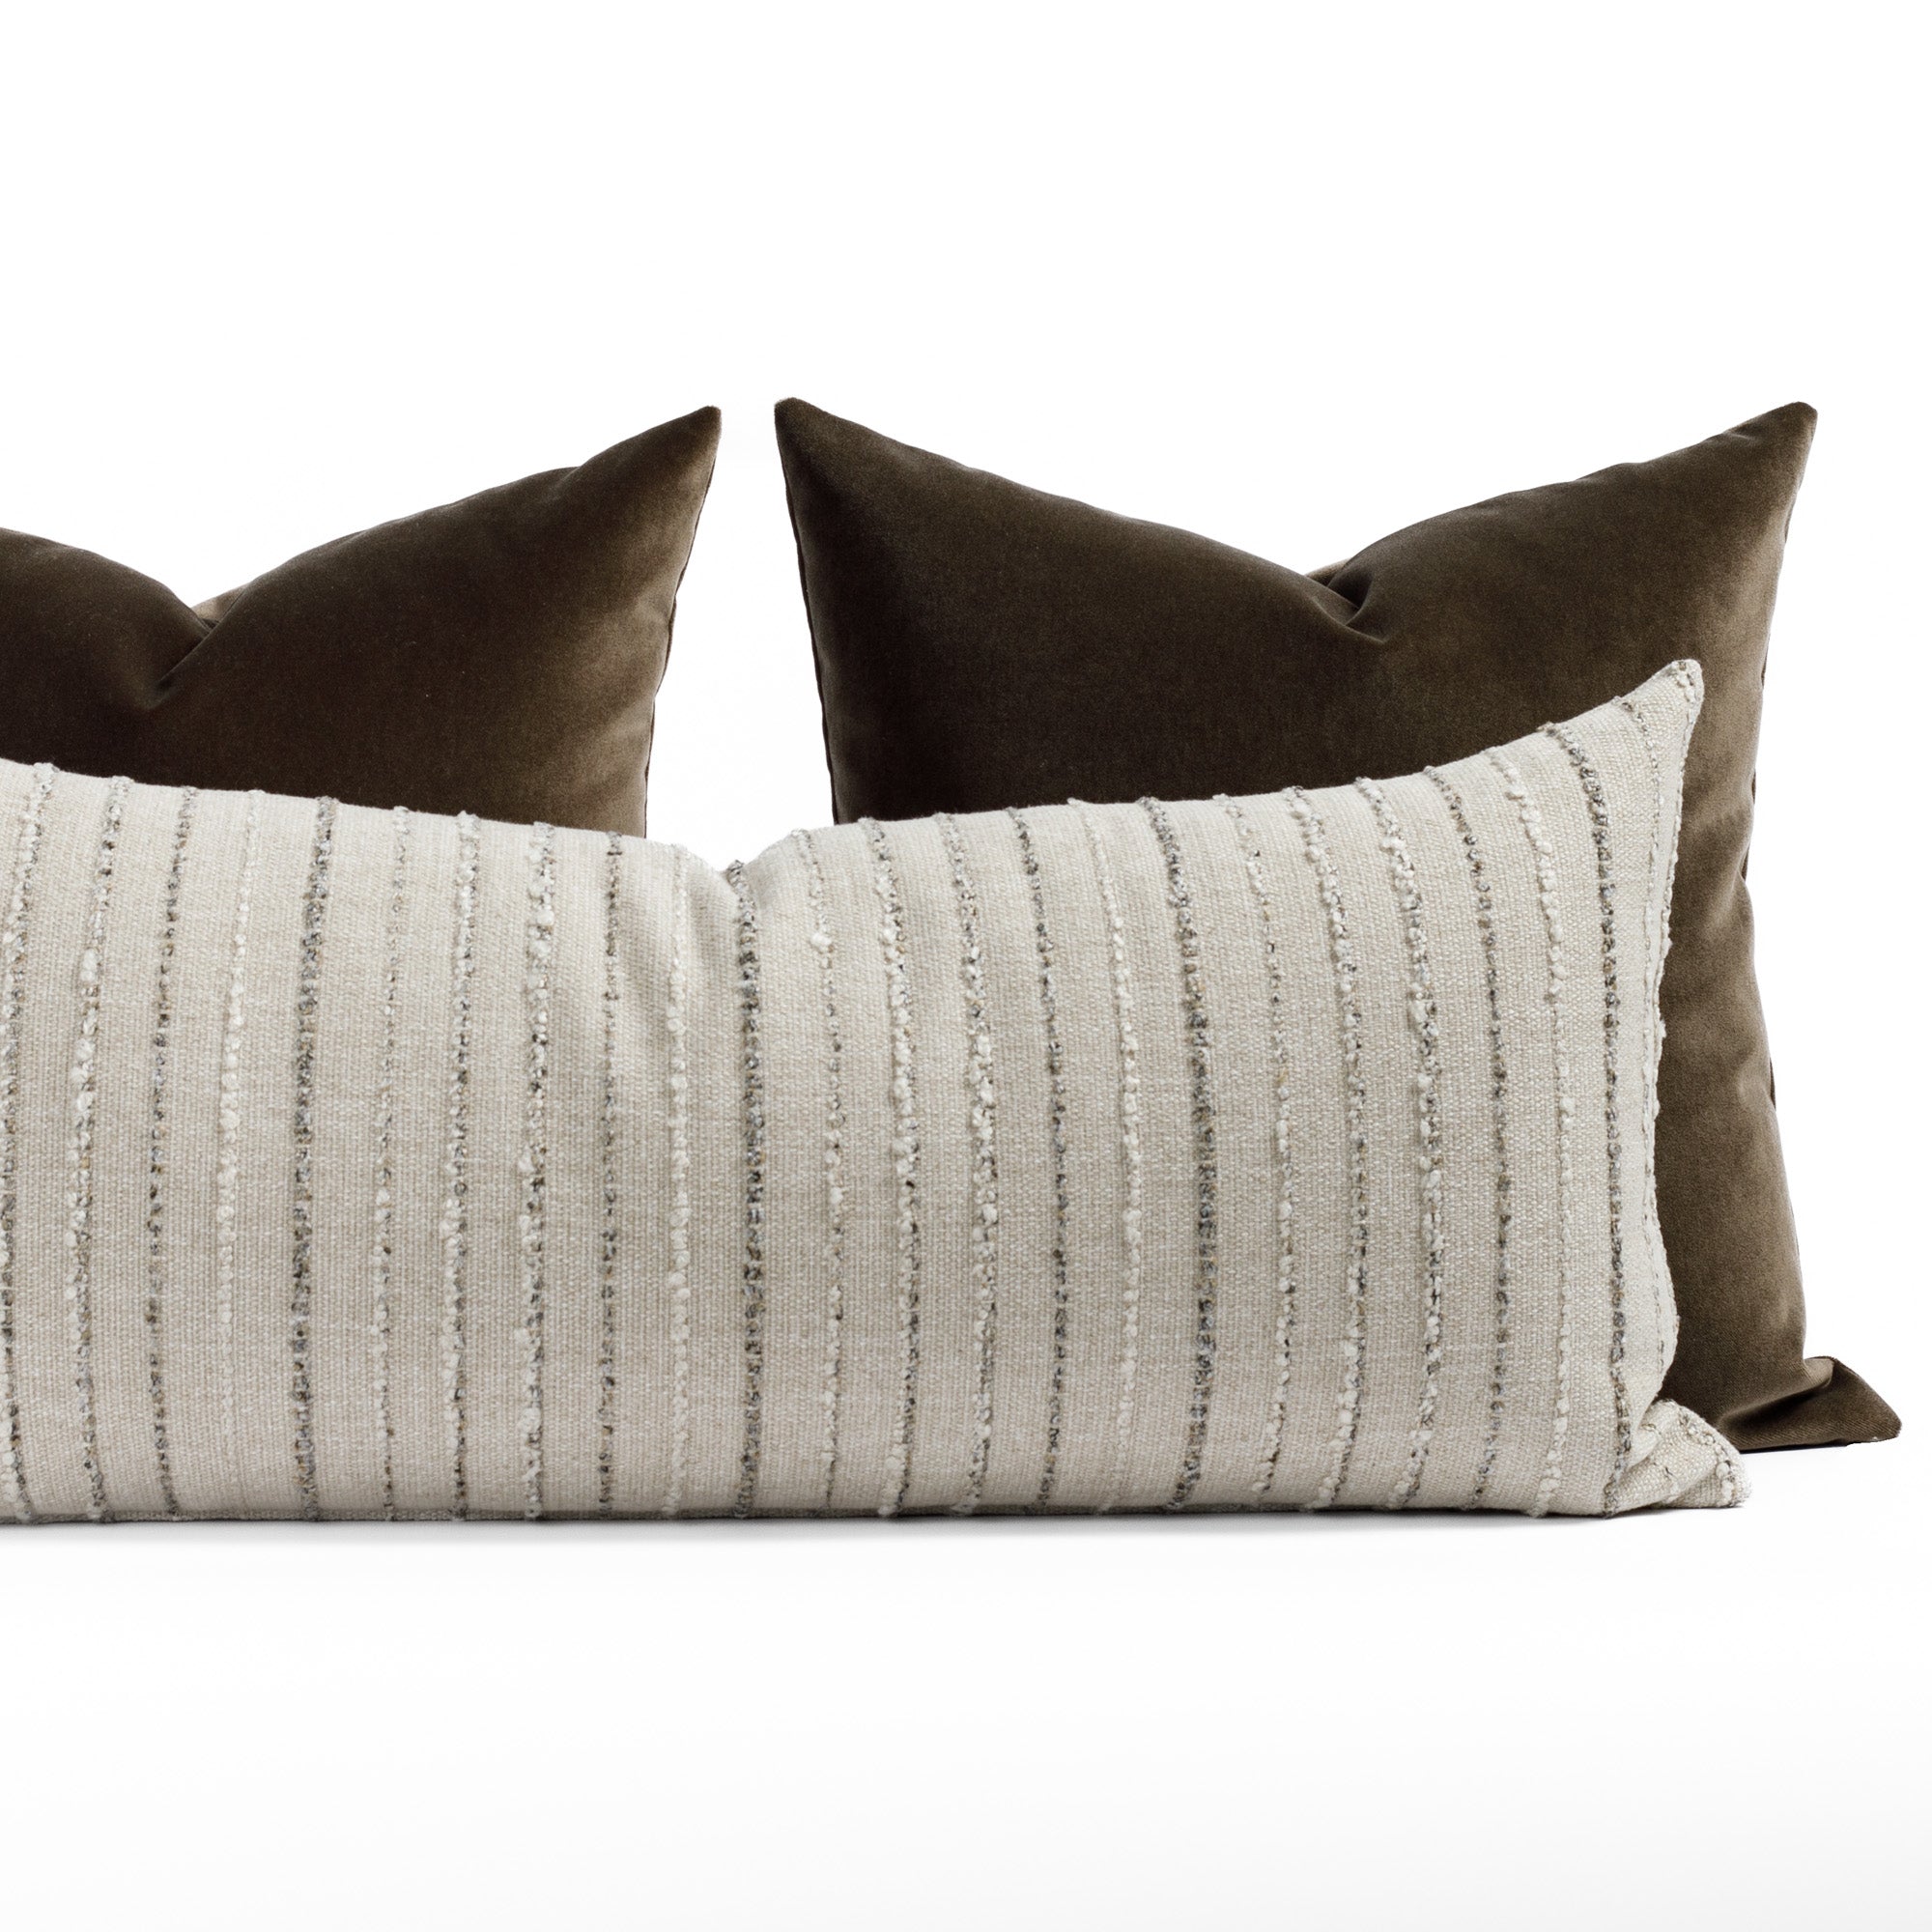 earth toned Tonic Living pillows